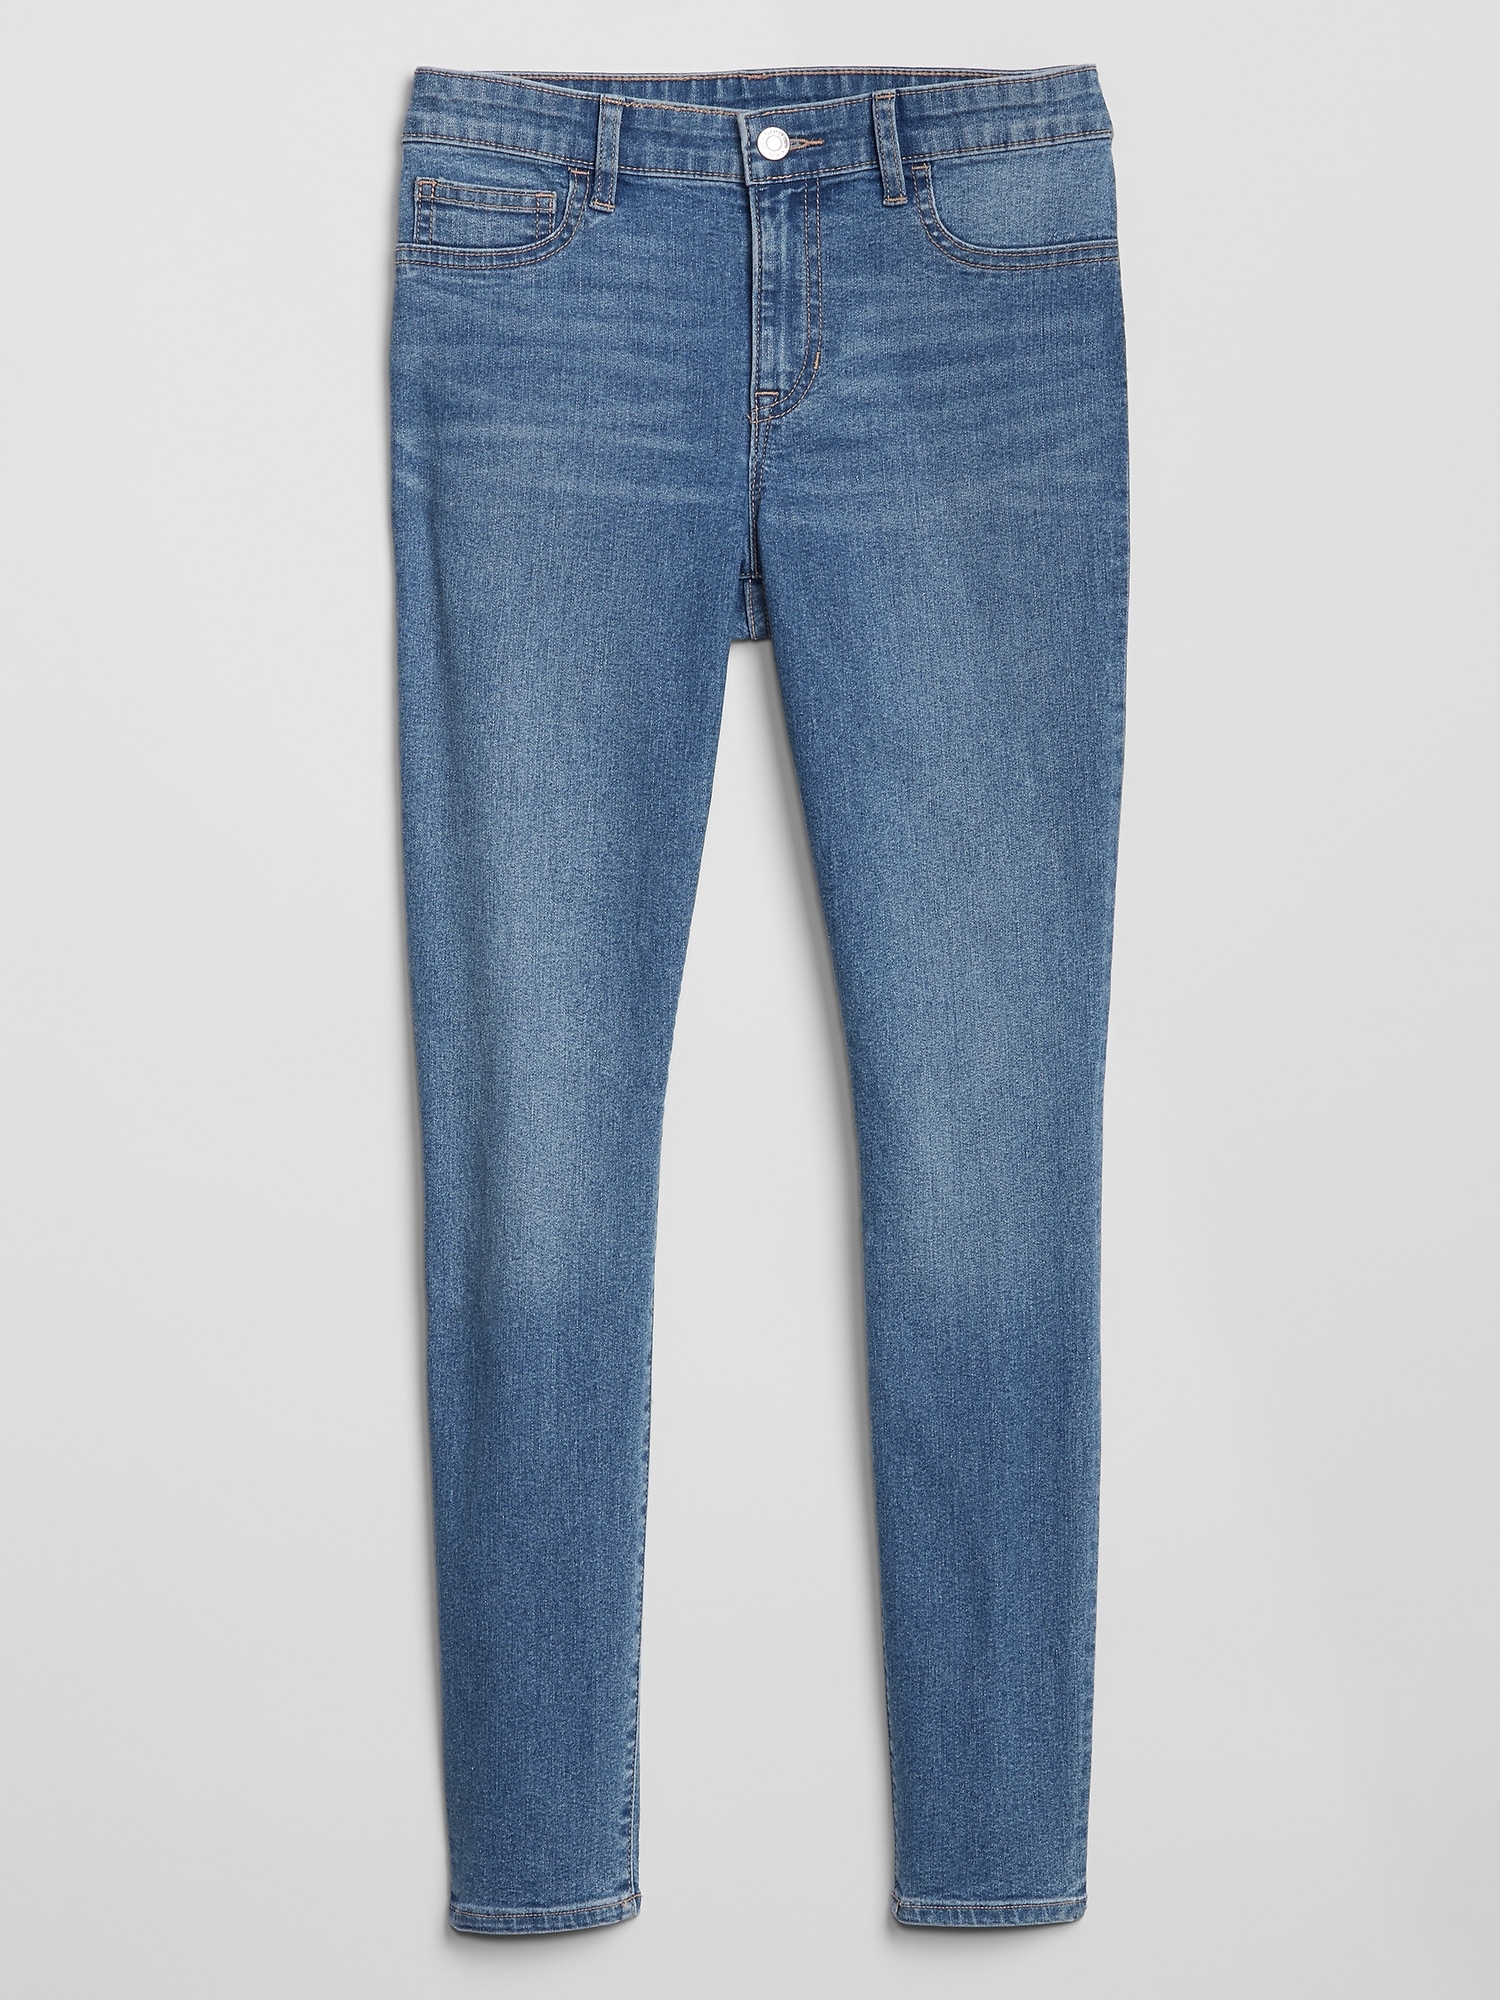 GAP, Jeans, Host Pick Gap Denim Jeggings Size 427 Regular